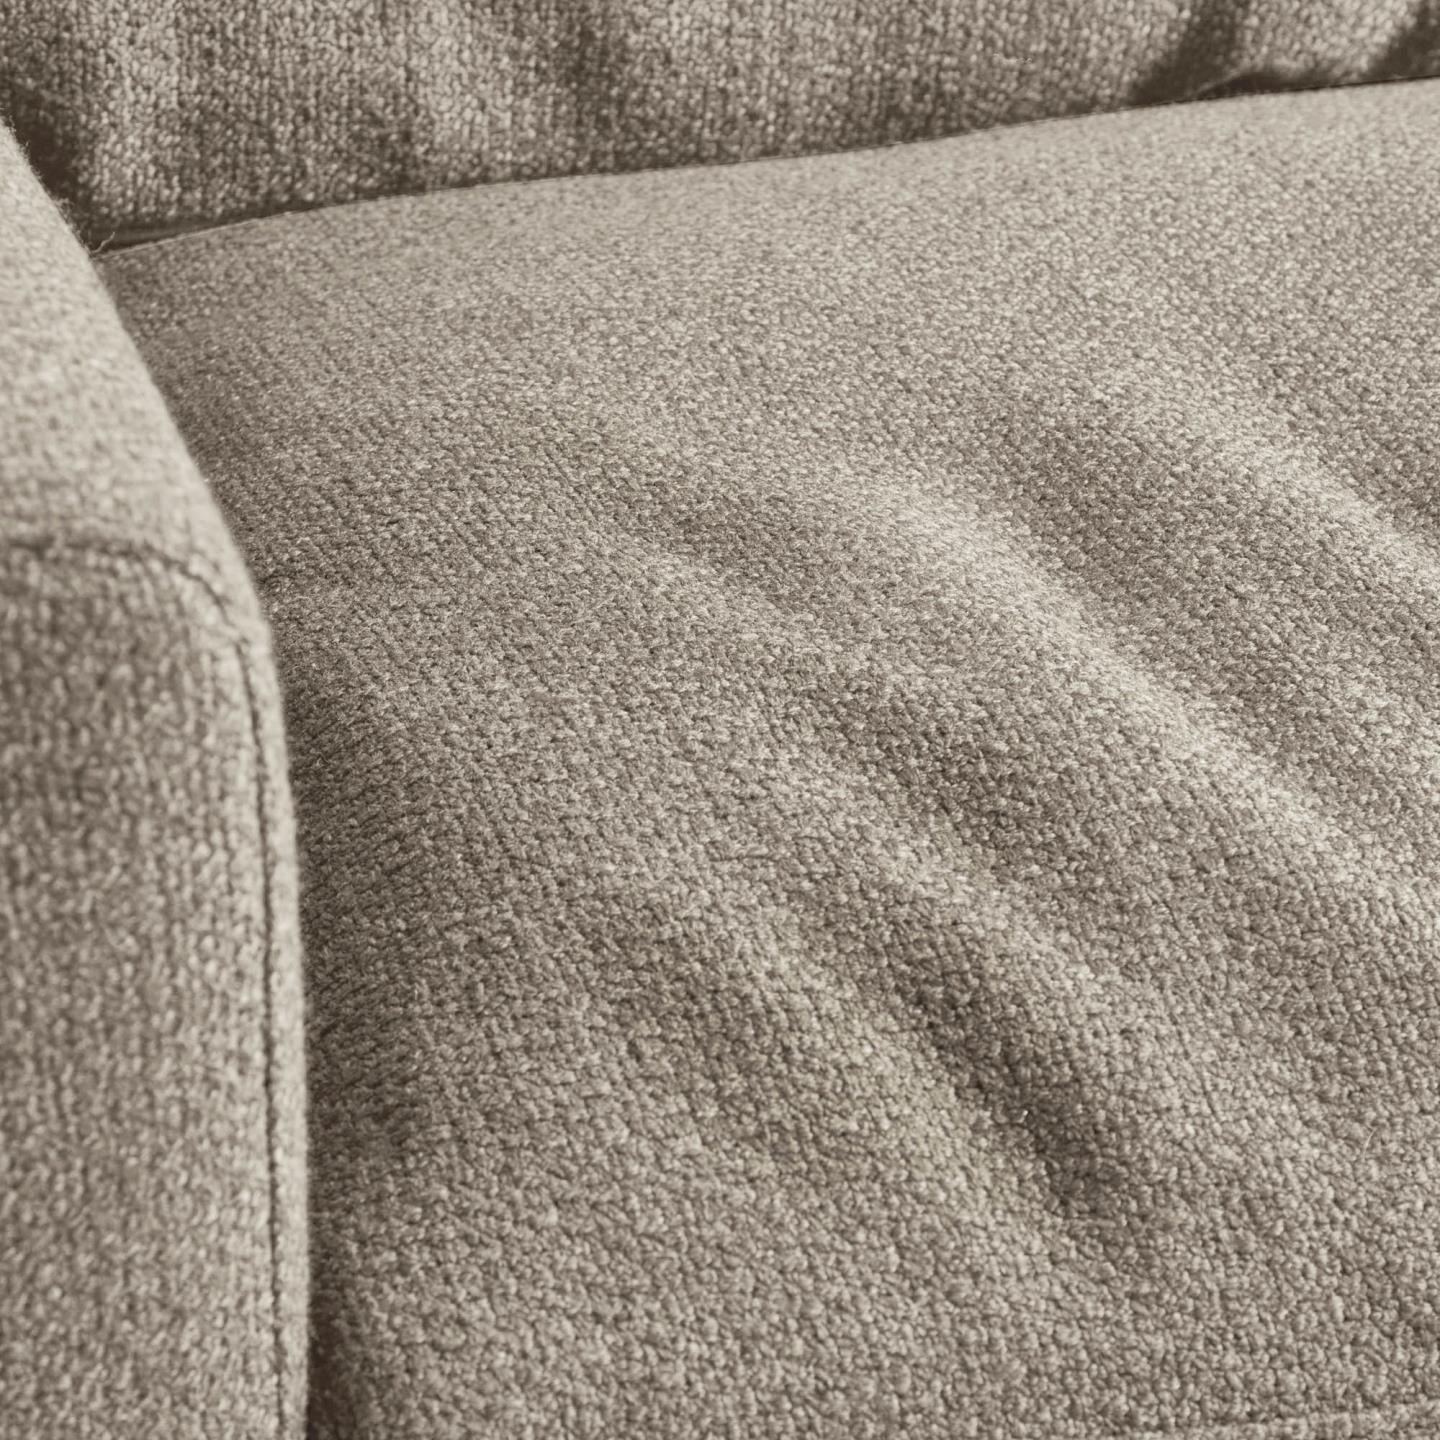 Fabric Sofa W/ Iron Legs